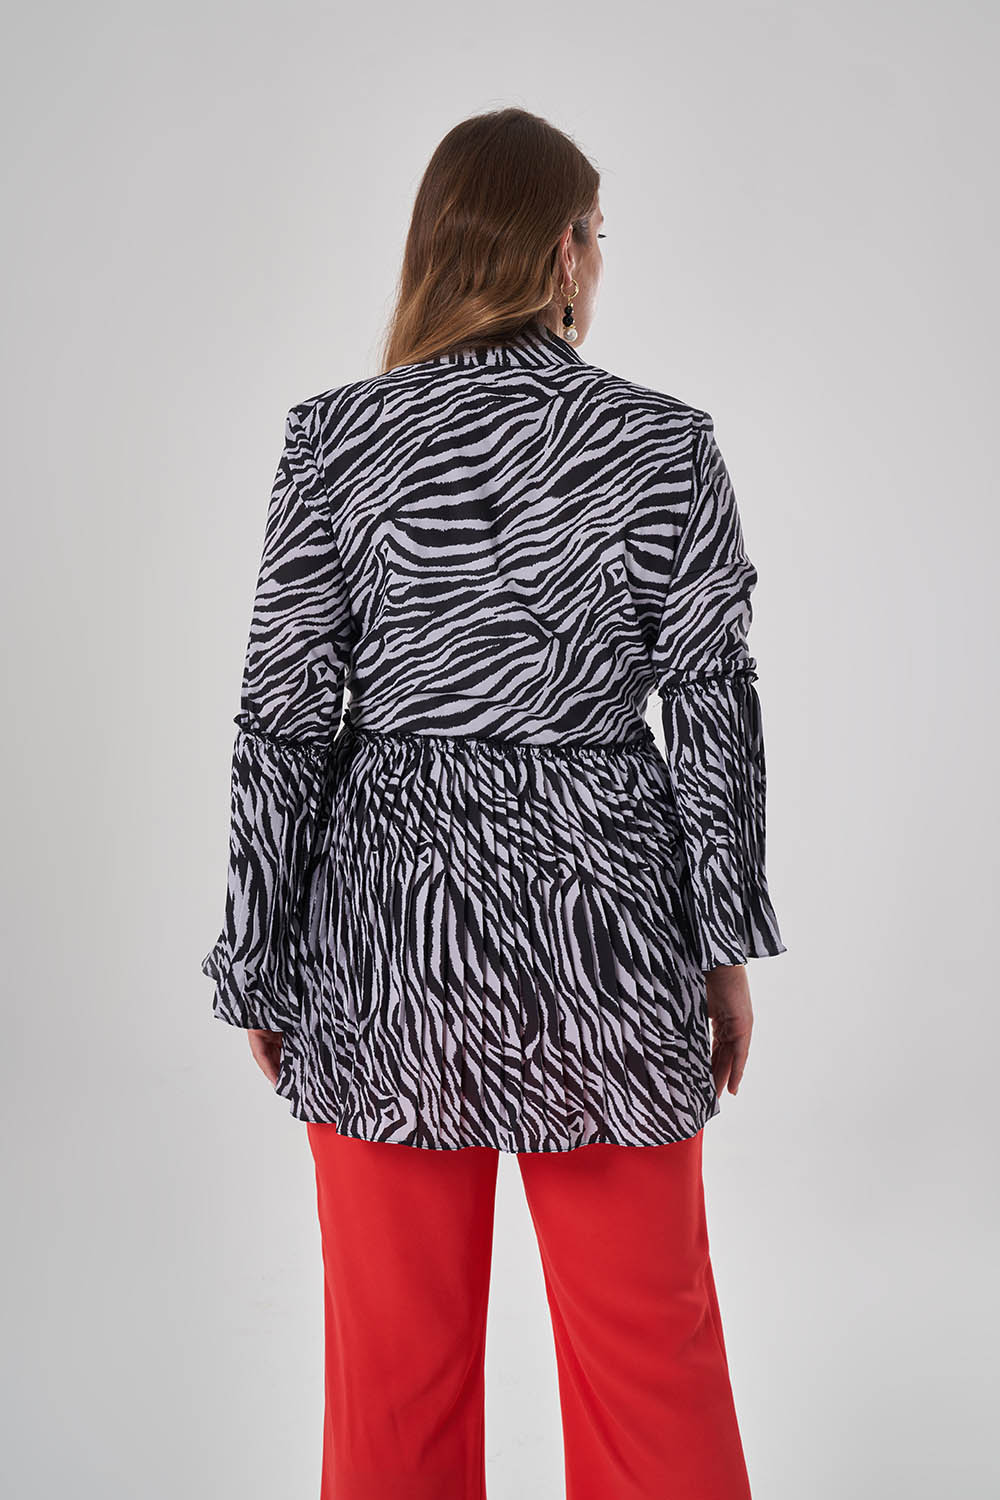 Zebra Patterned Tunic